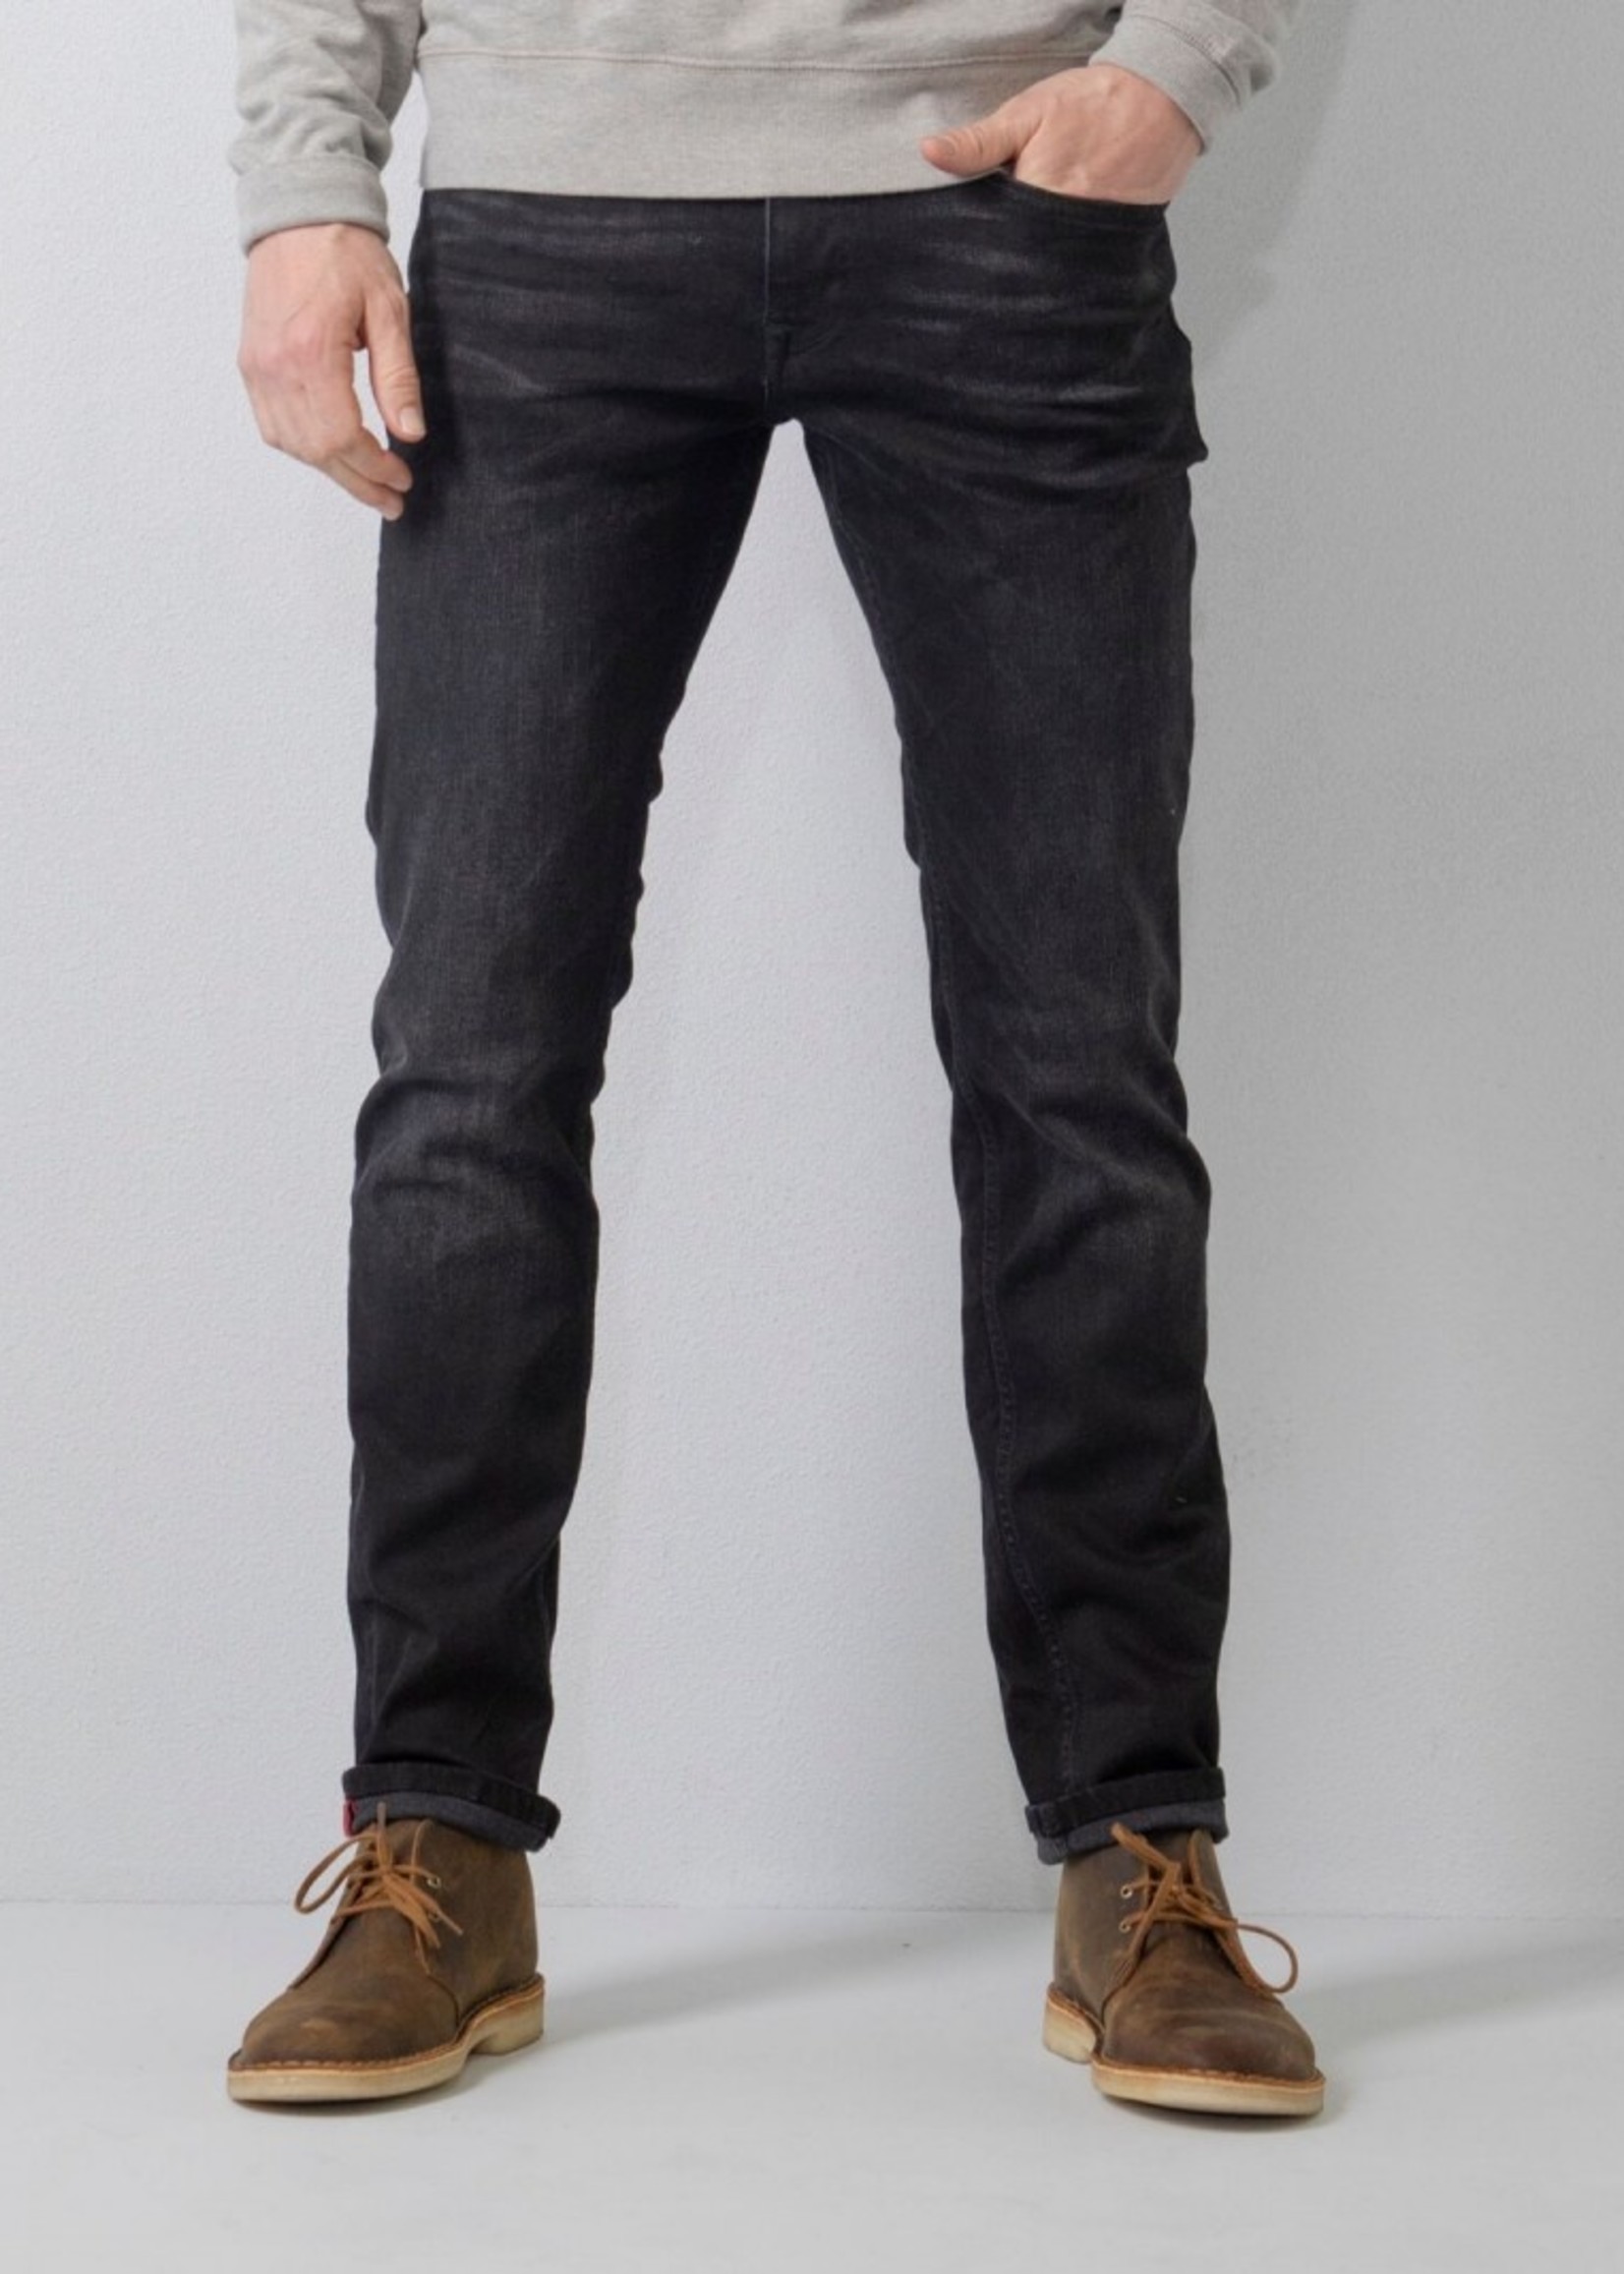 PETROL RUSSEL tapered regular fit jeans